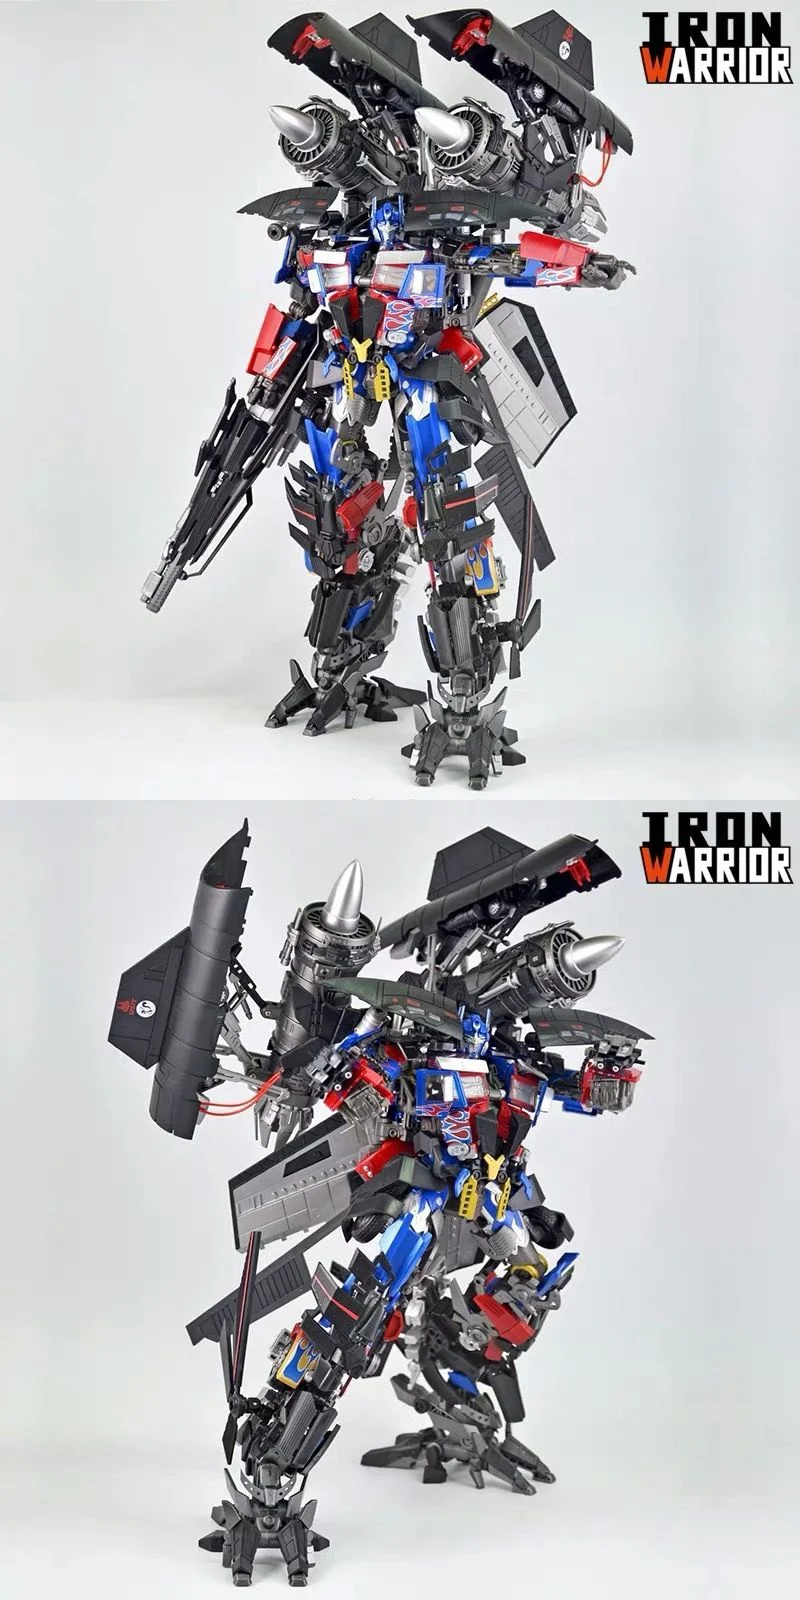 ToysHero InHand Transformers Iron Warrior IW-06 MPM04 Optimus Prime upgrade kit 